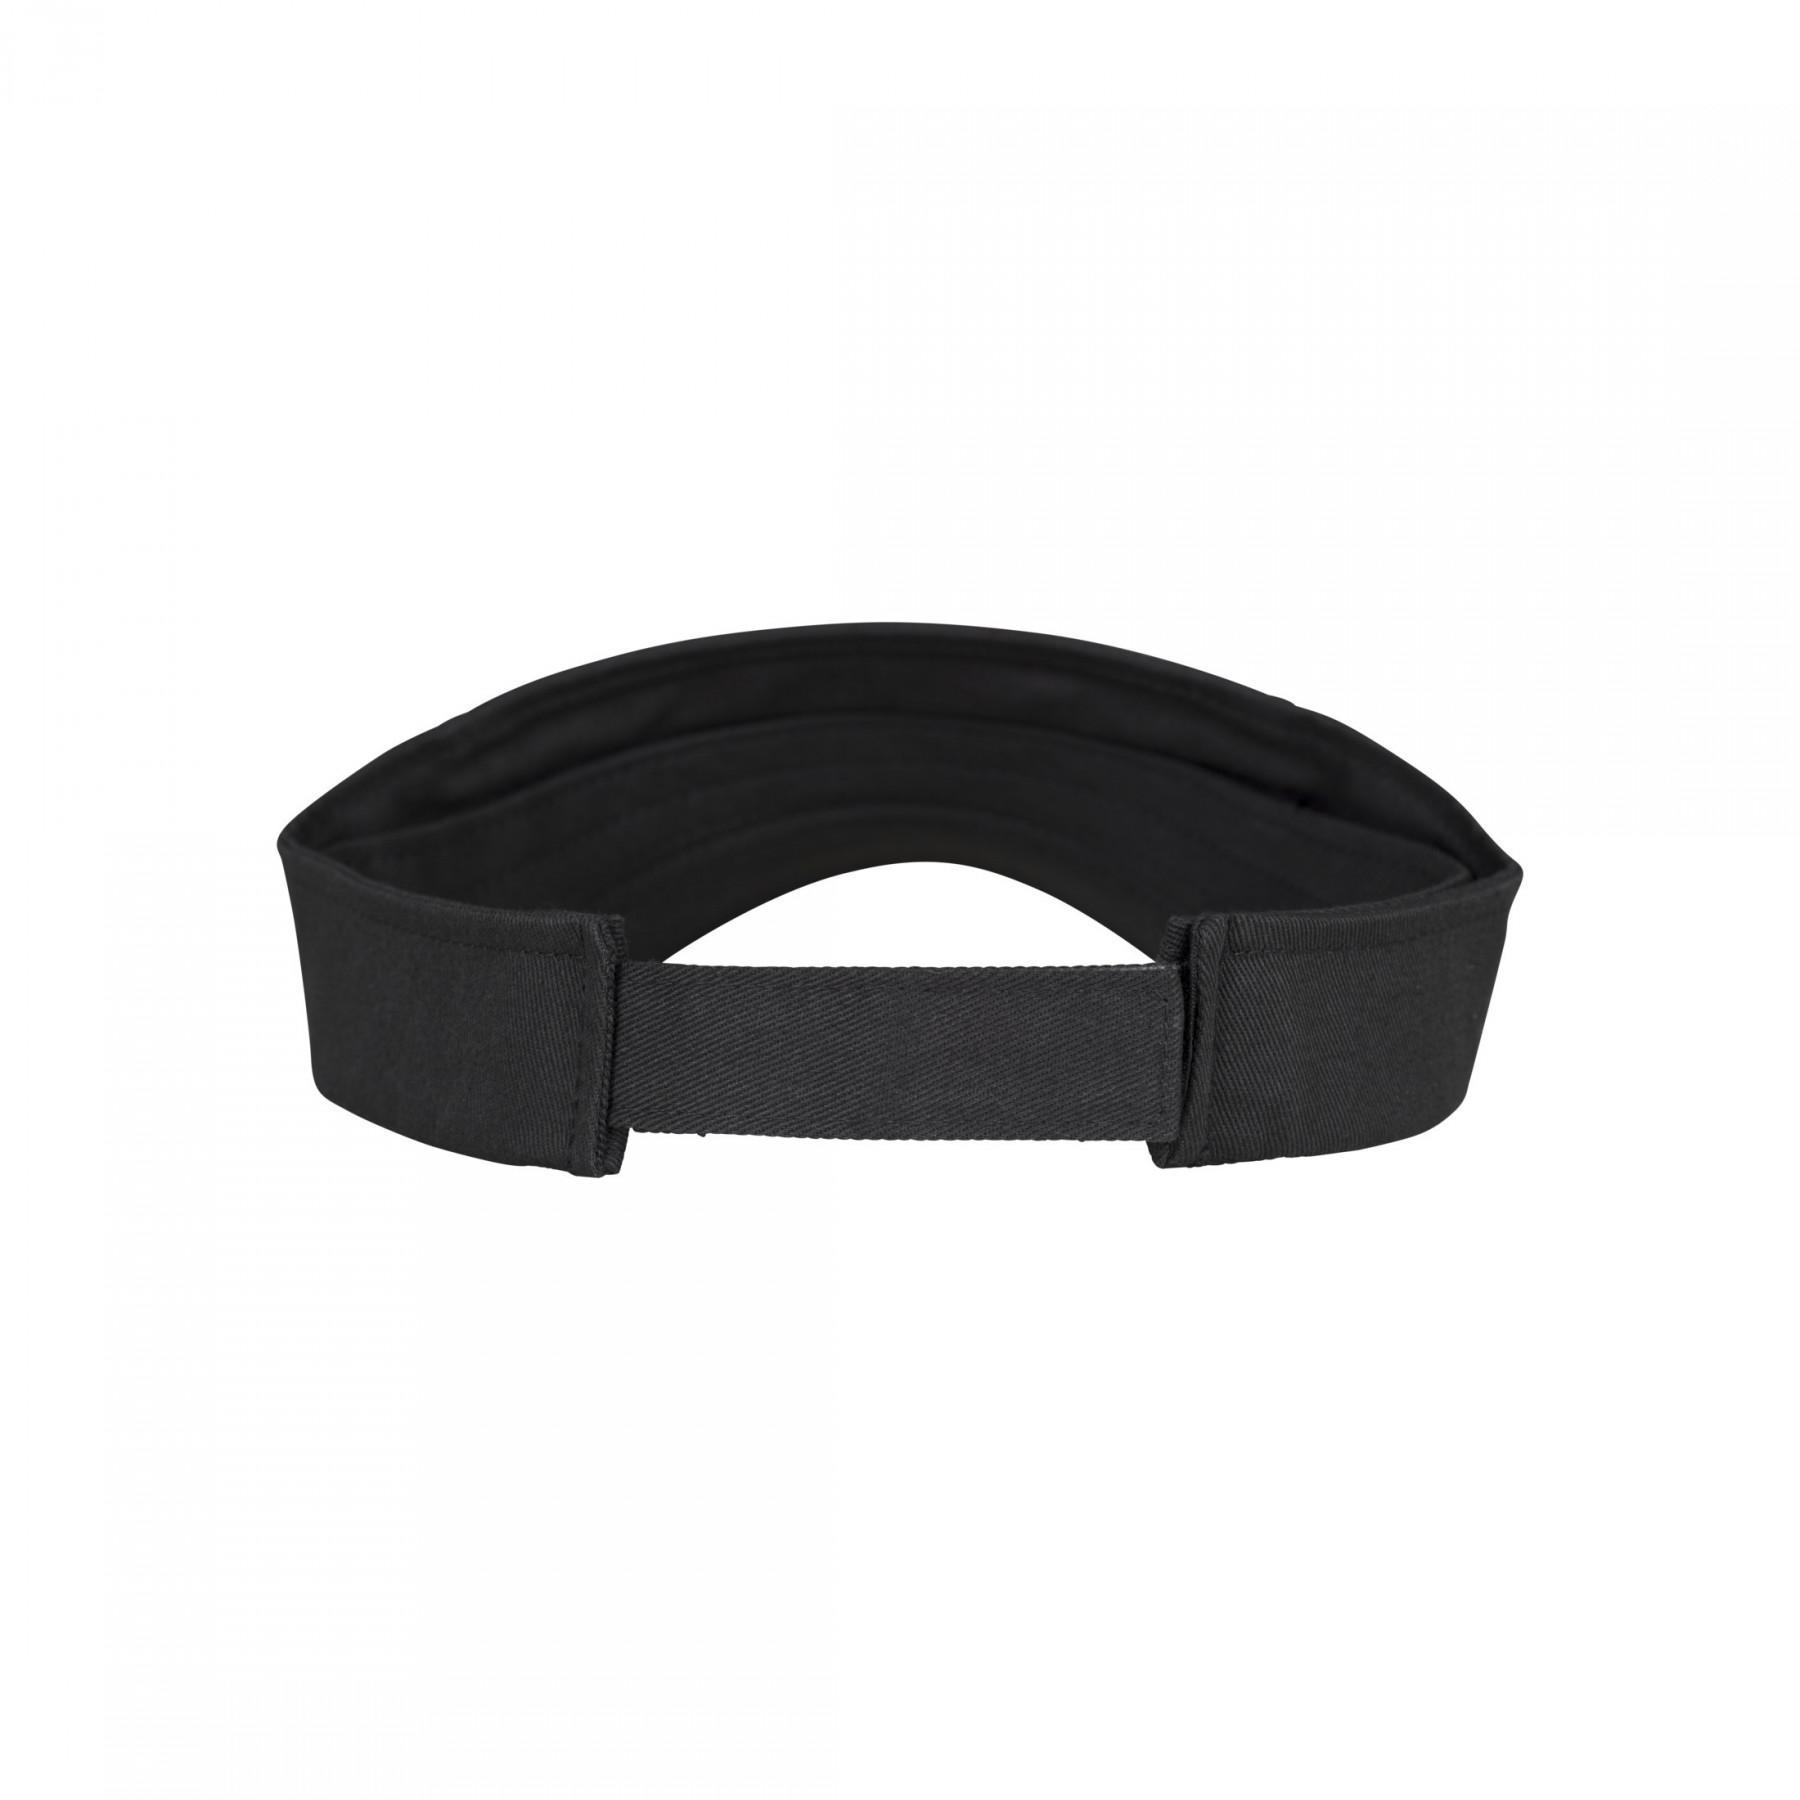 Gorra Flexfit curved visor